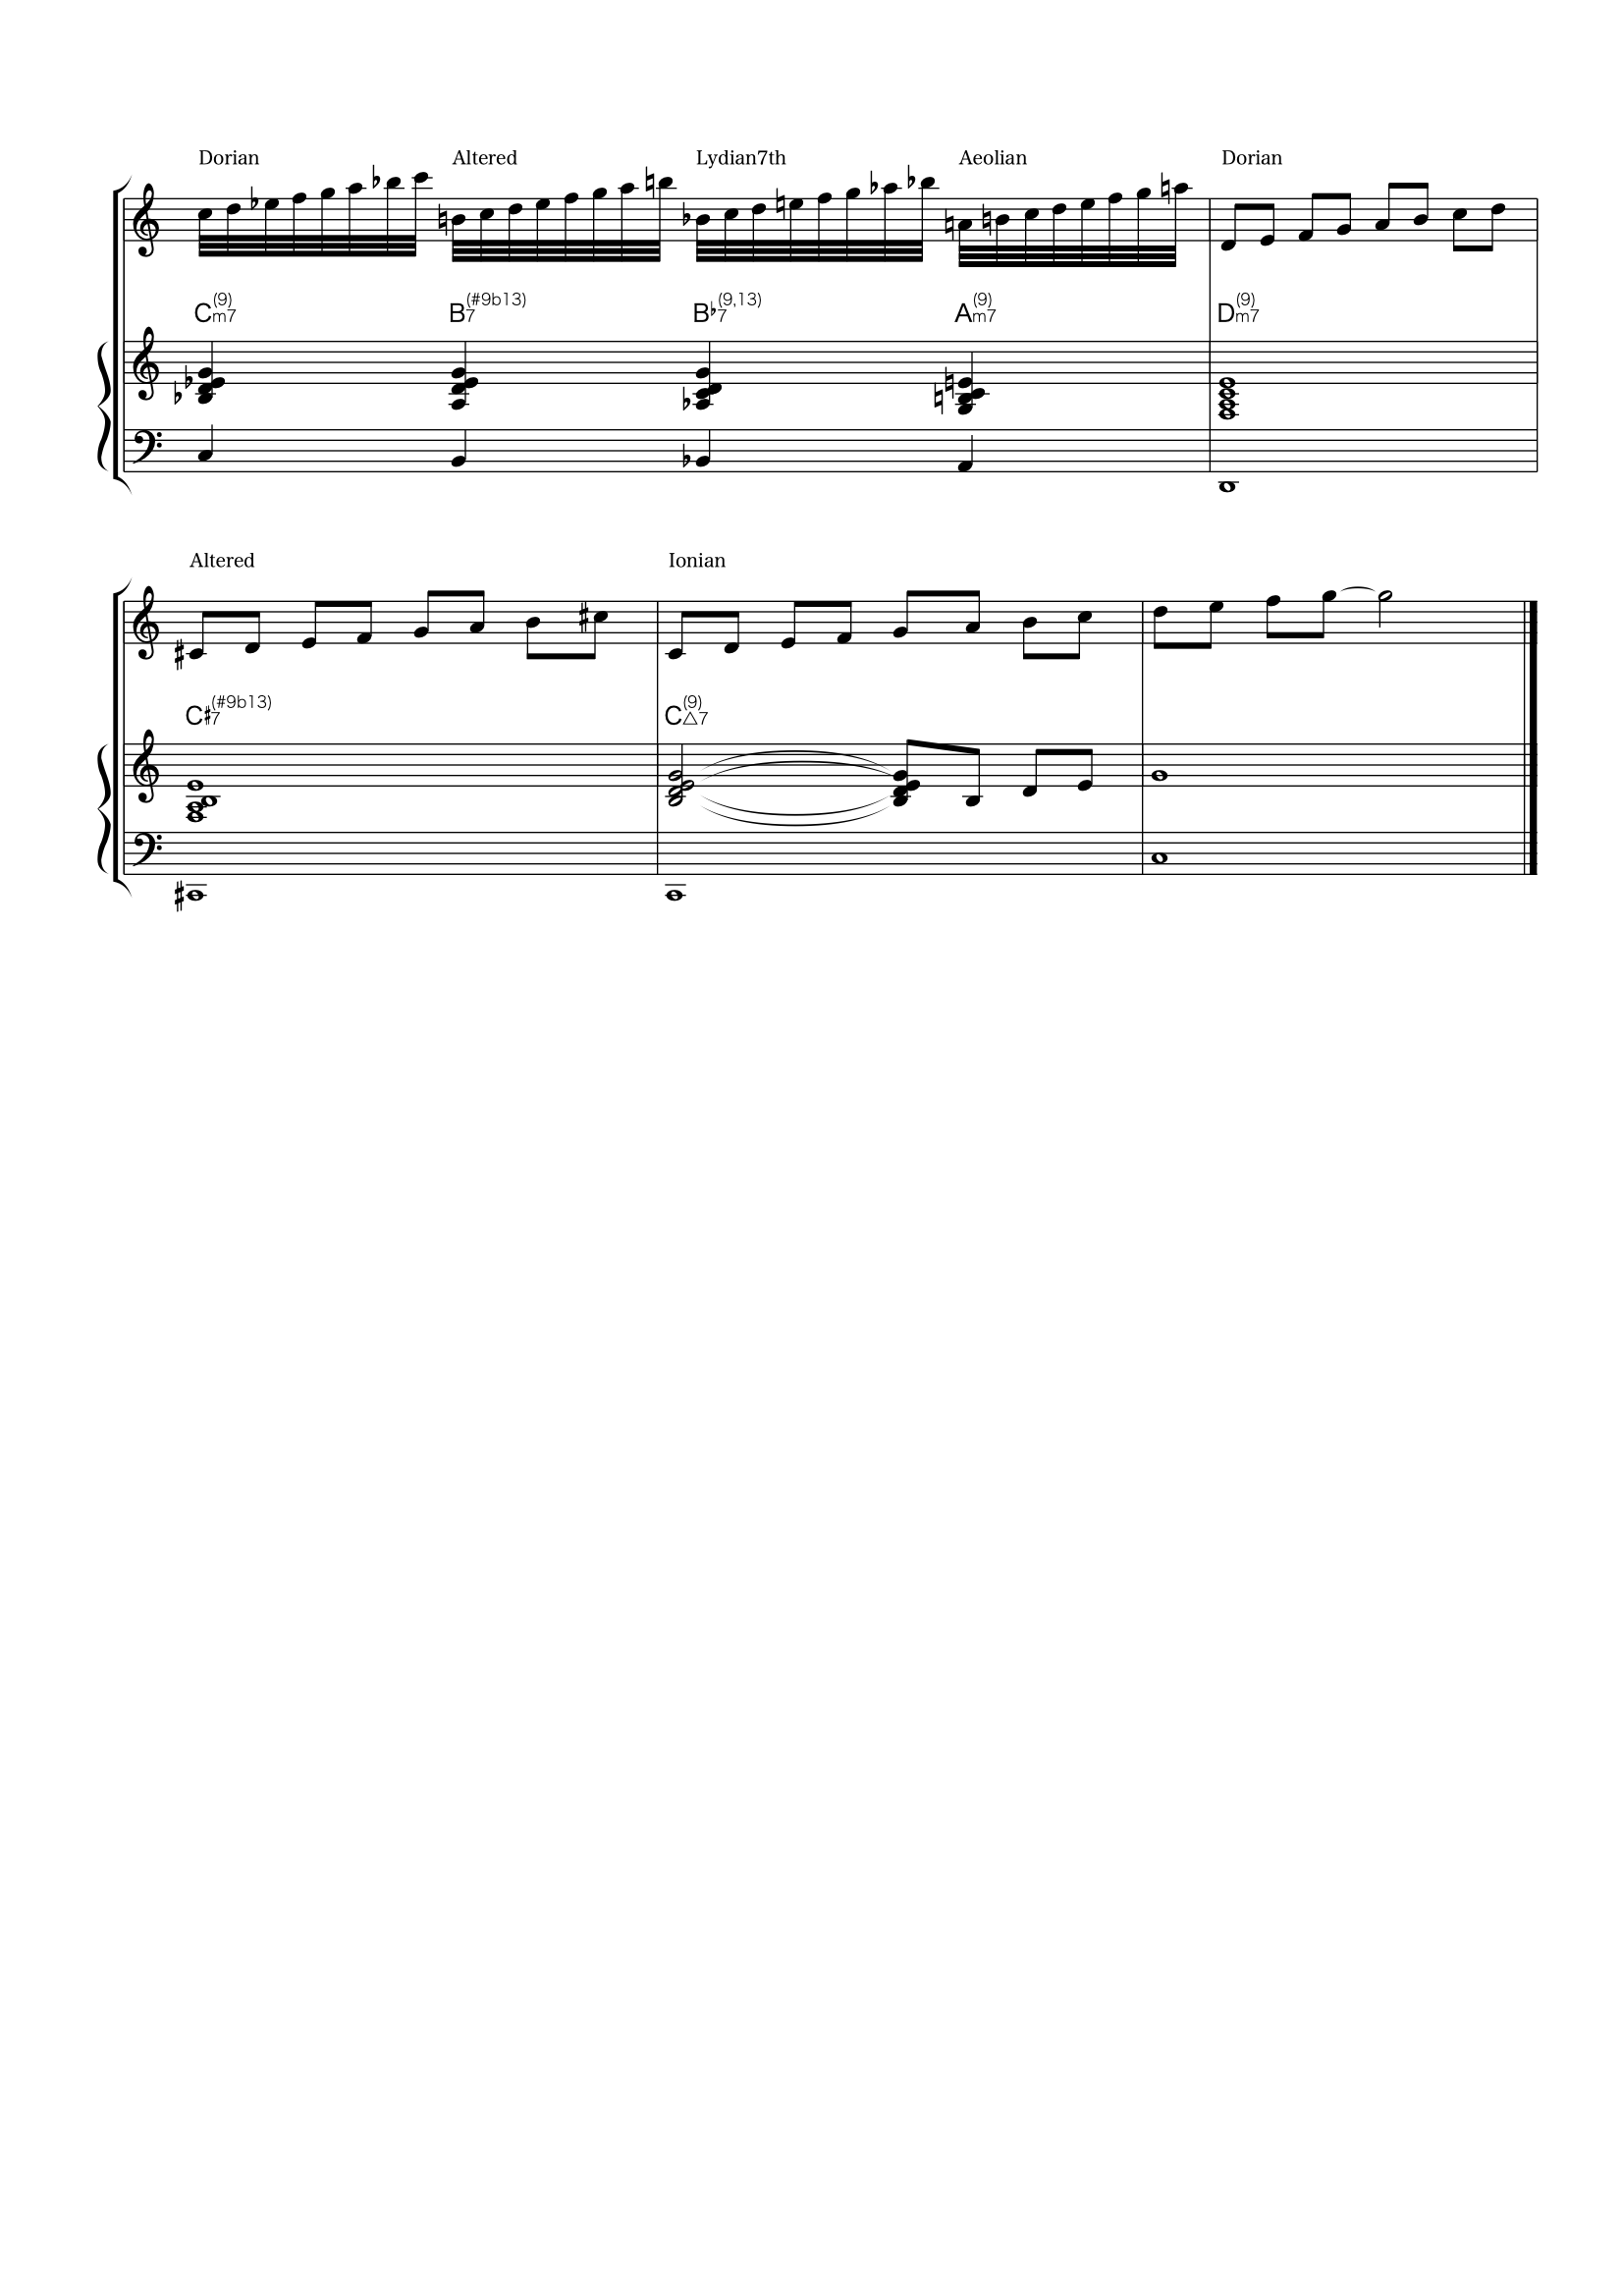 advanced chord progression 3